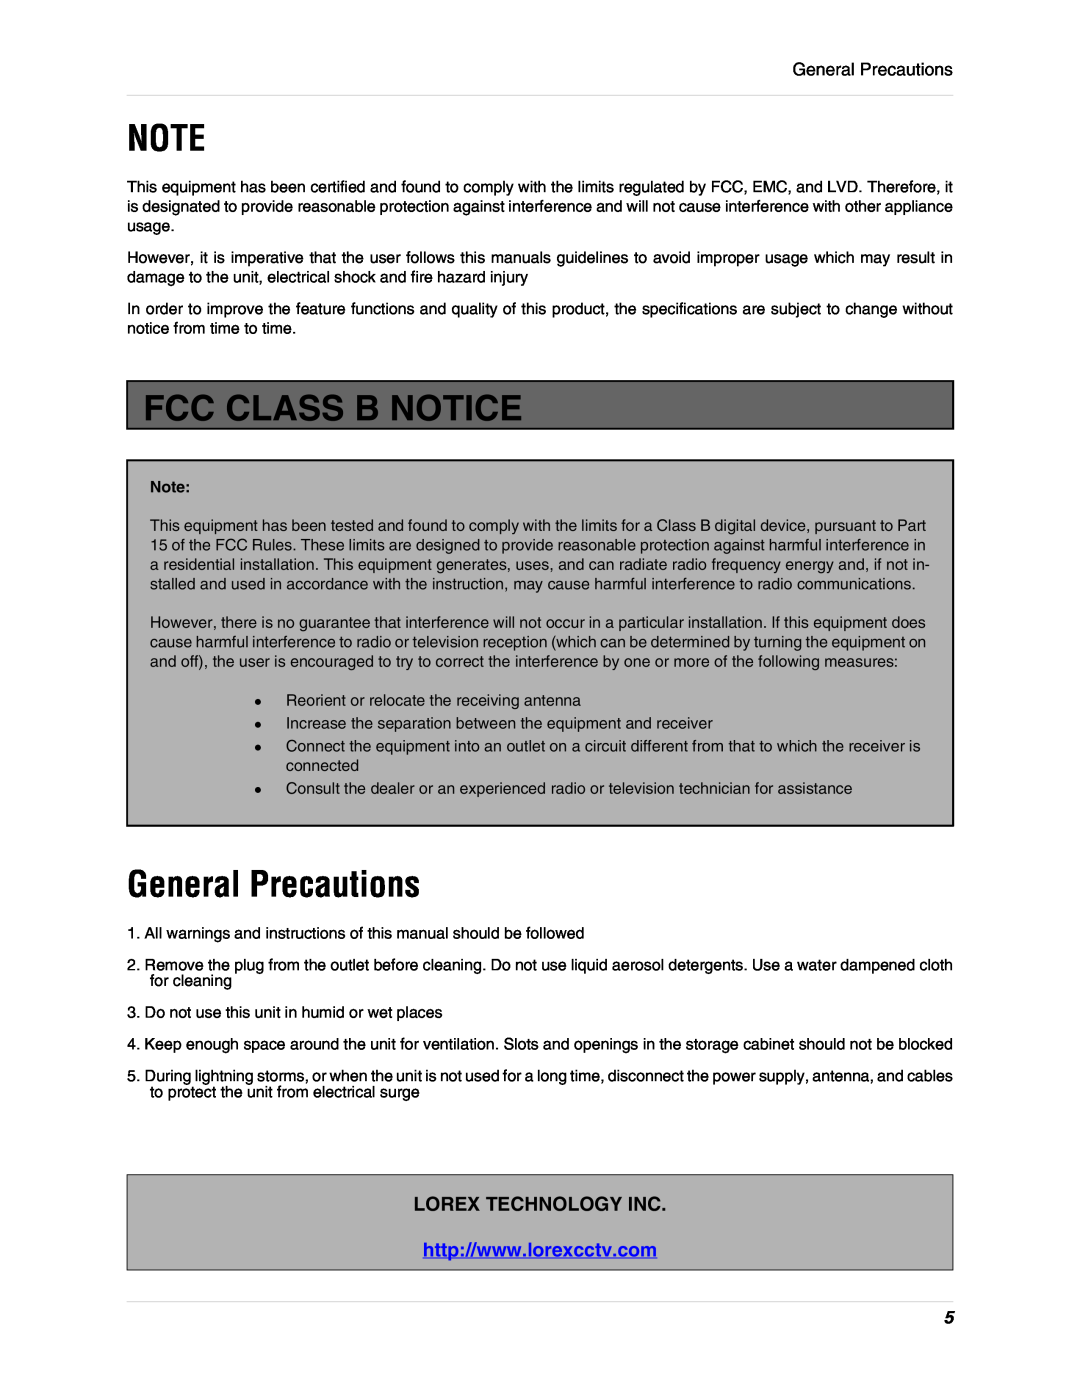 LOREX Technology SHS-2S7LD Series instruction manual Fcc Class B Notice, General Precautions, Lorex Technology Inc 